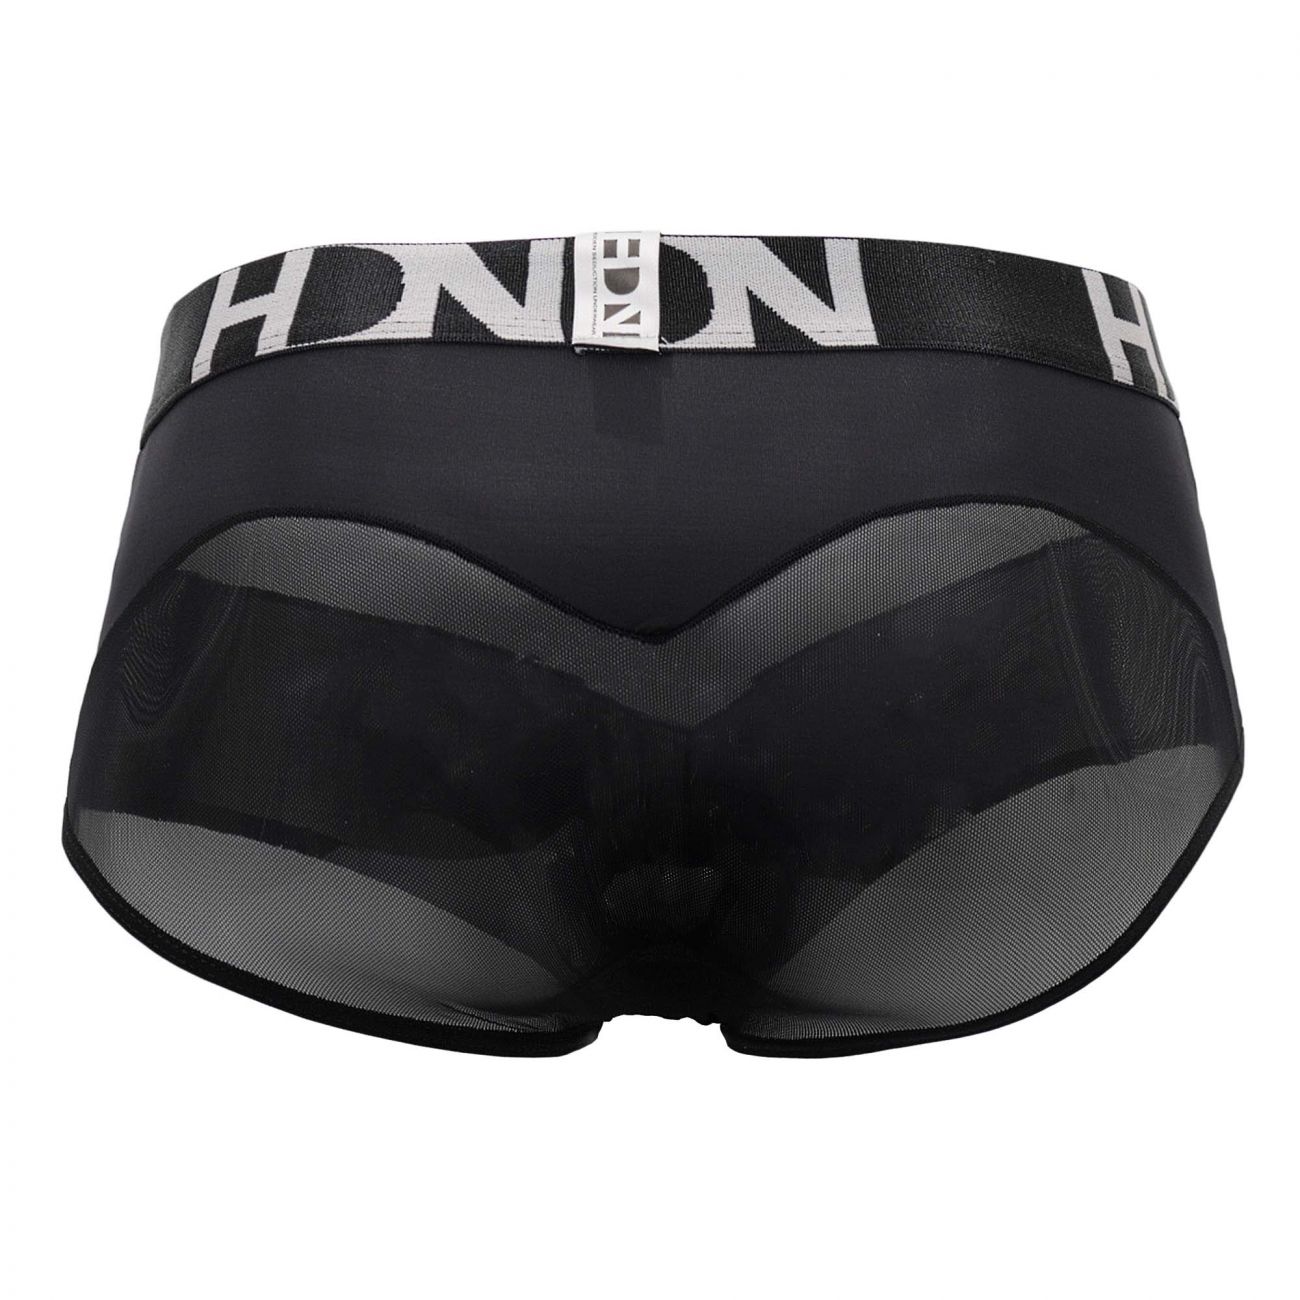 Mens Underwear: Hidden 952 Mesh Trunks | eBay